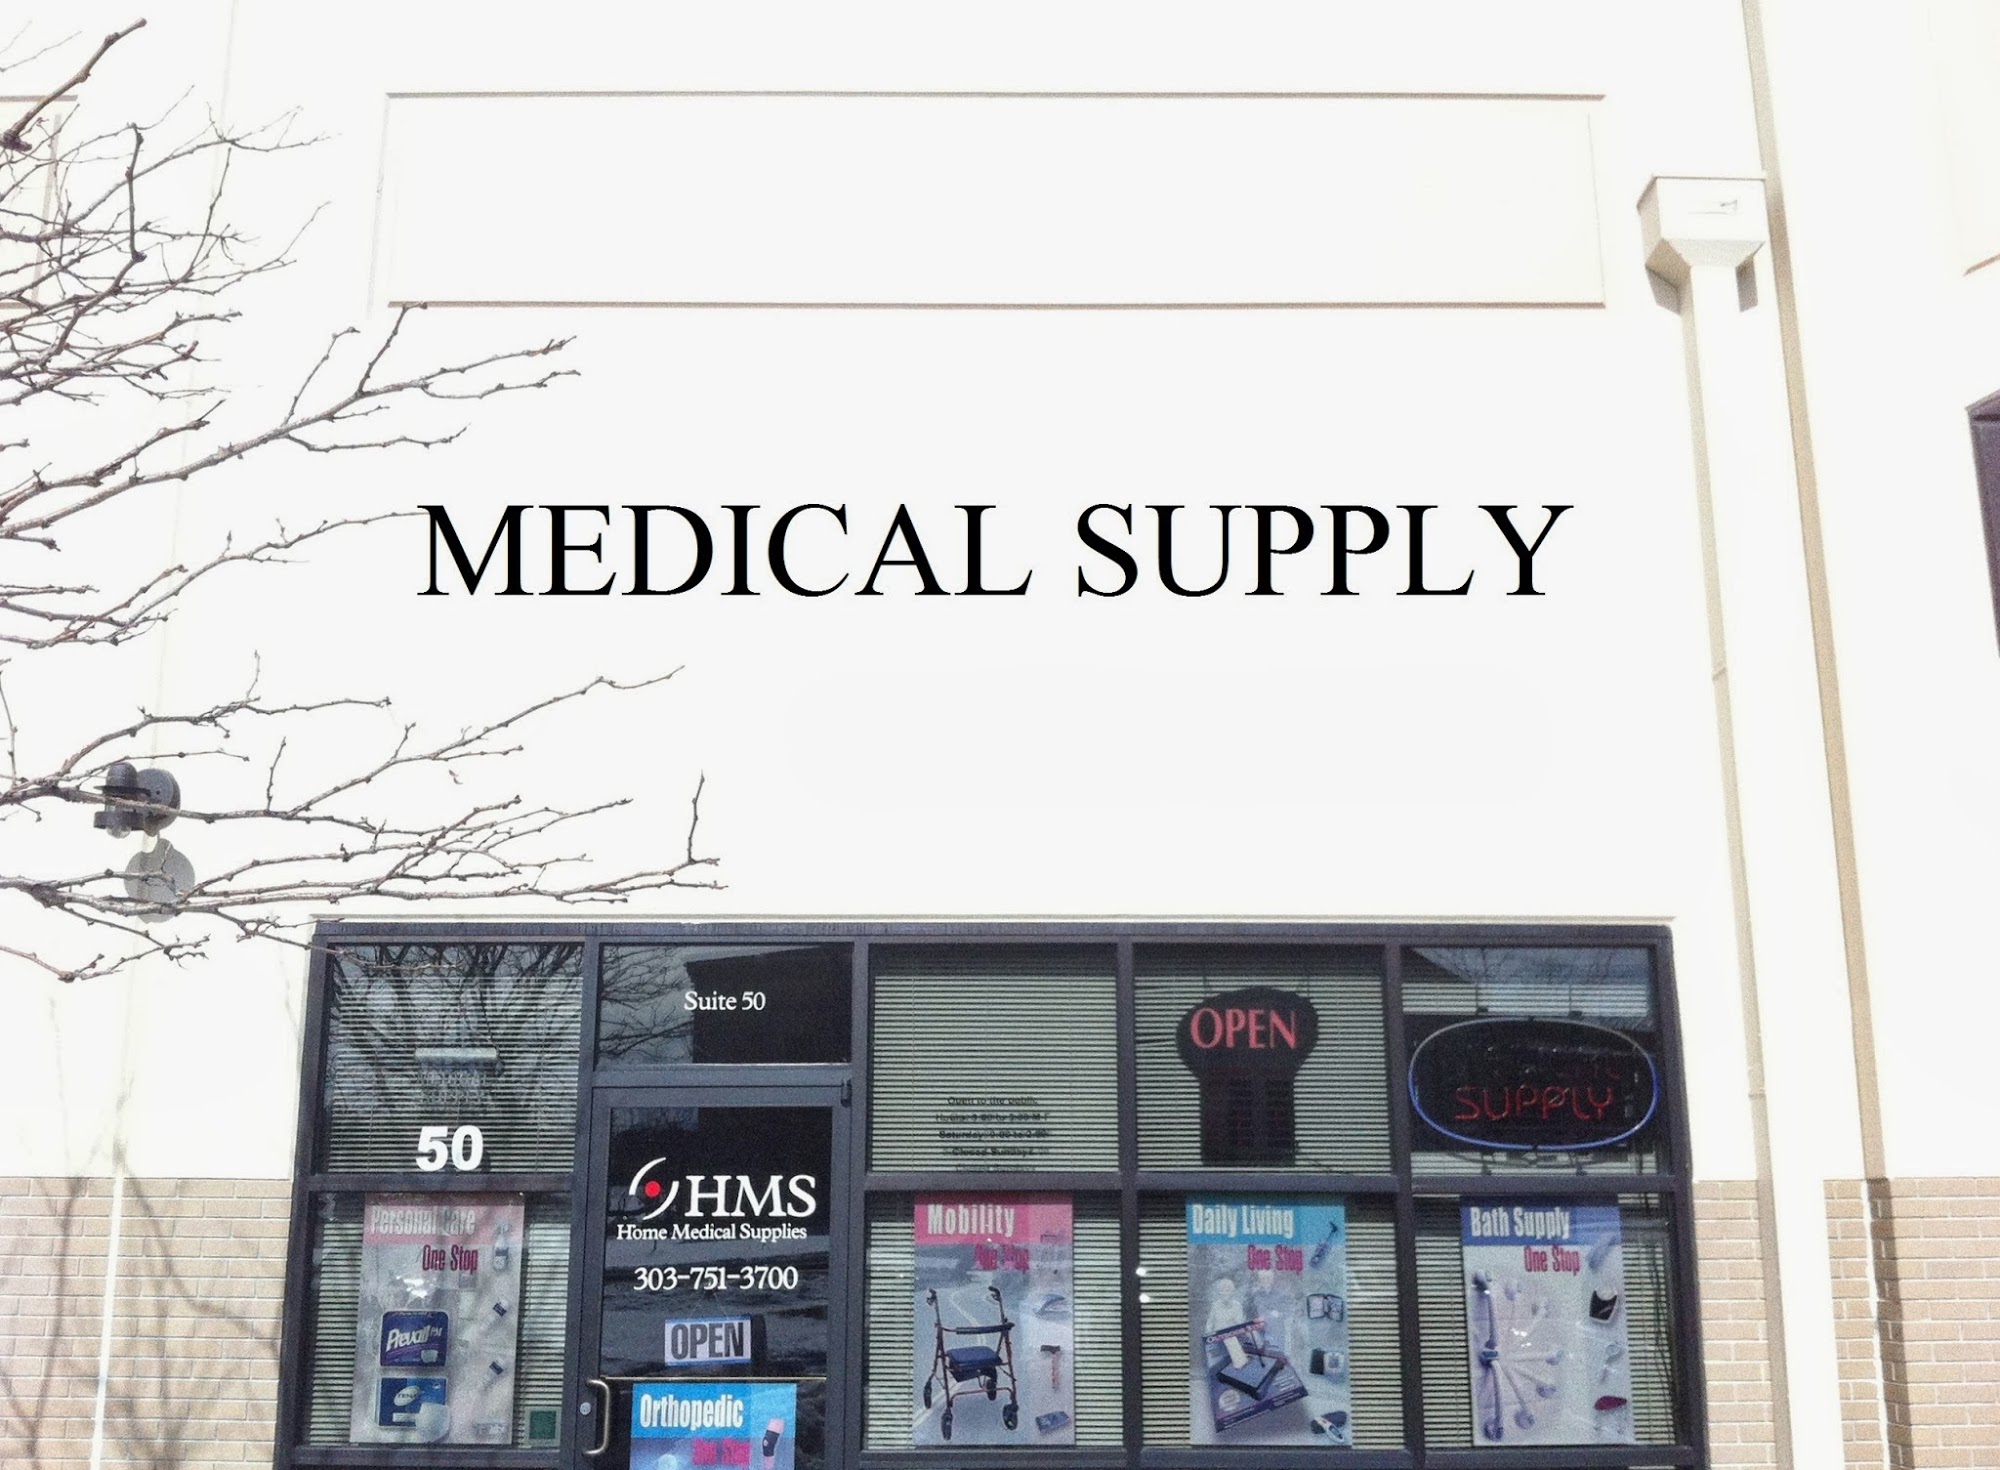 Home Medical Supplies, Inc